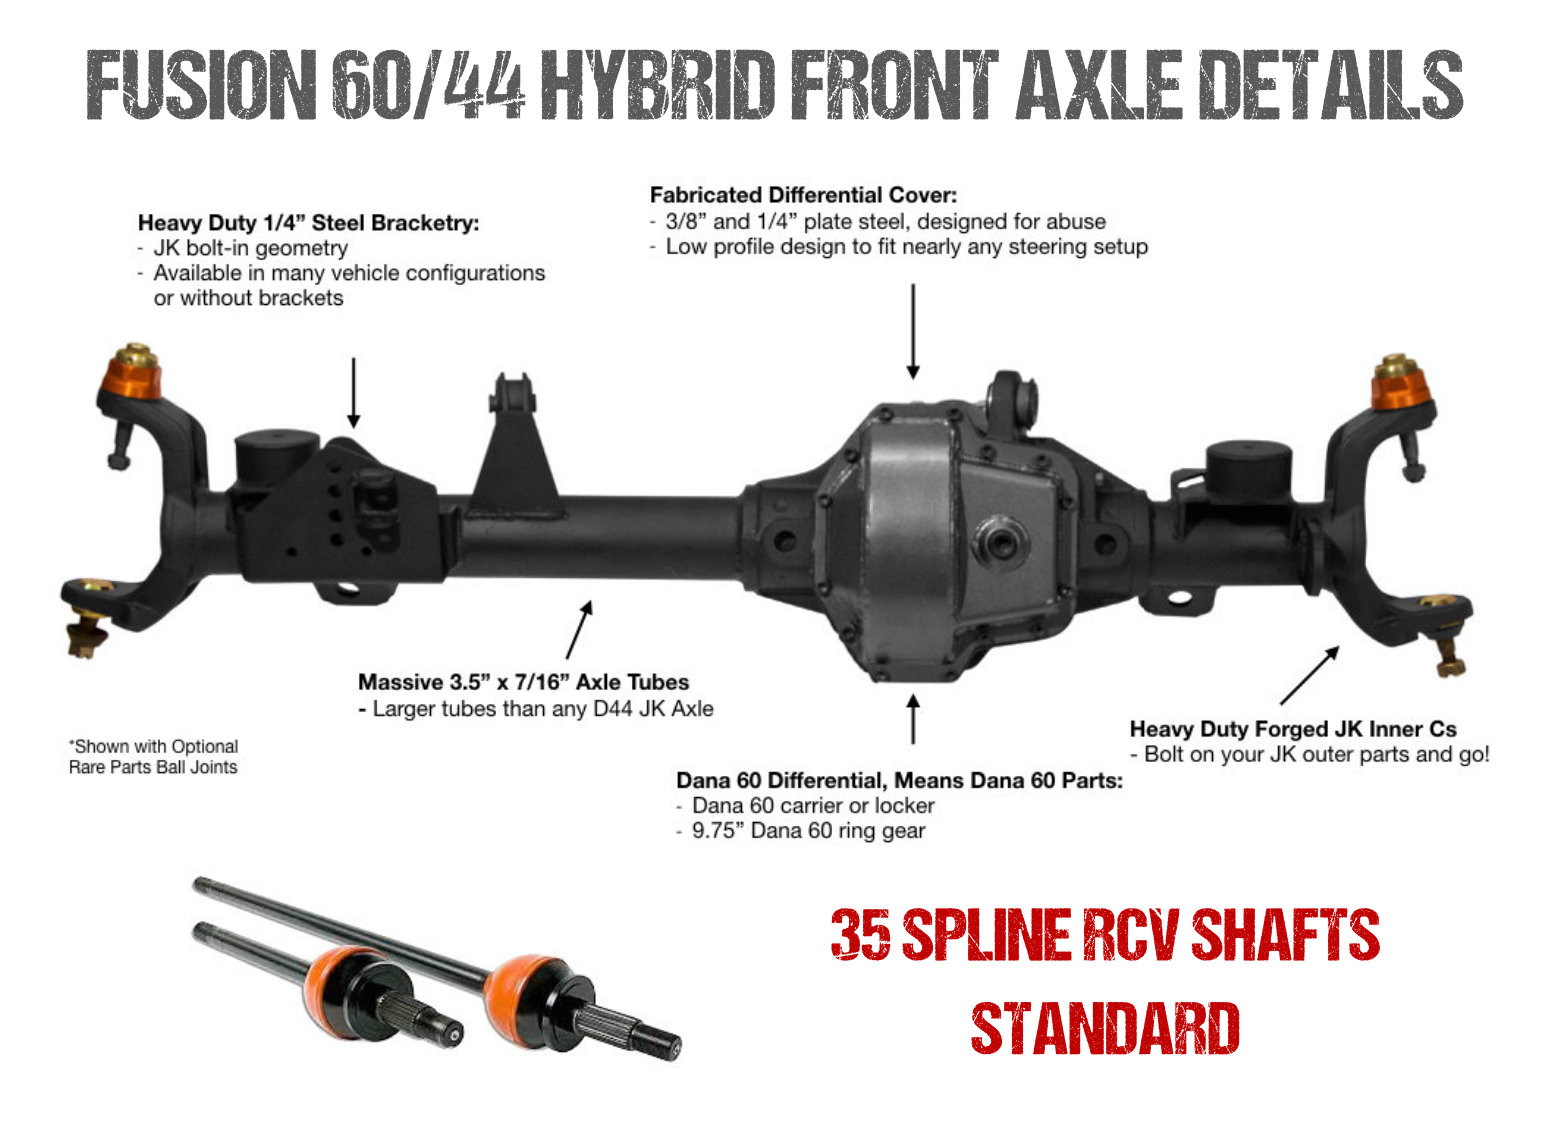 Dana 60 Front. Dana 30 Front Axle diagram. The Hybrid Front. Гибрид 44